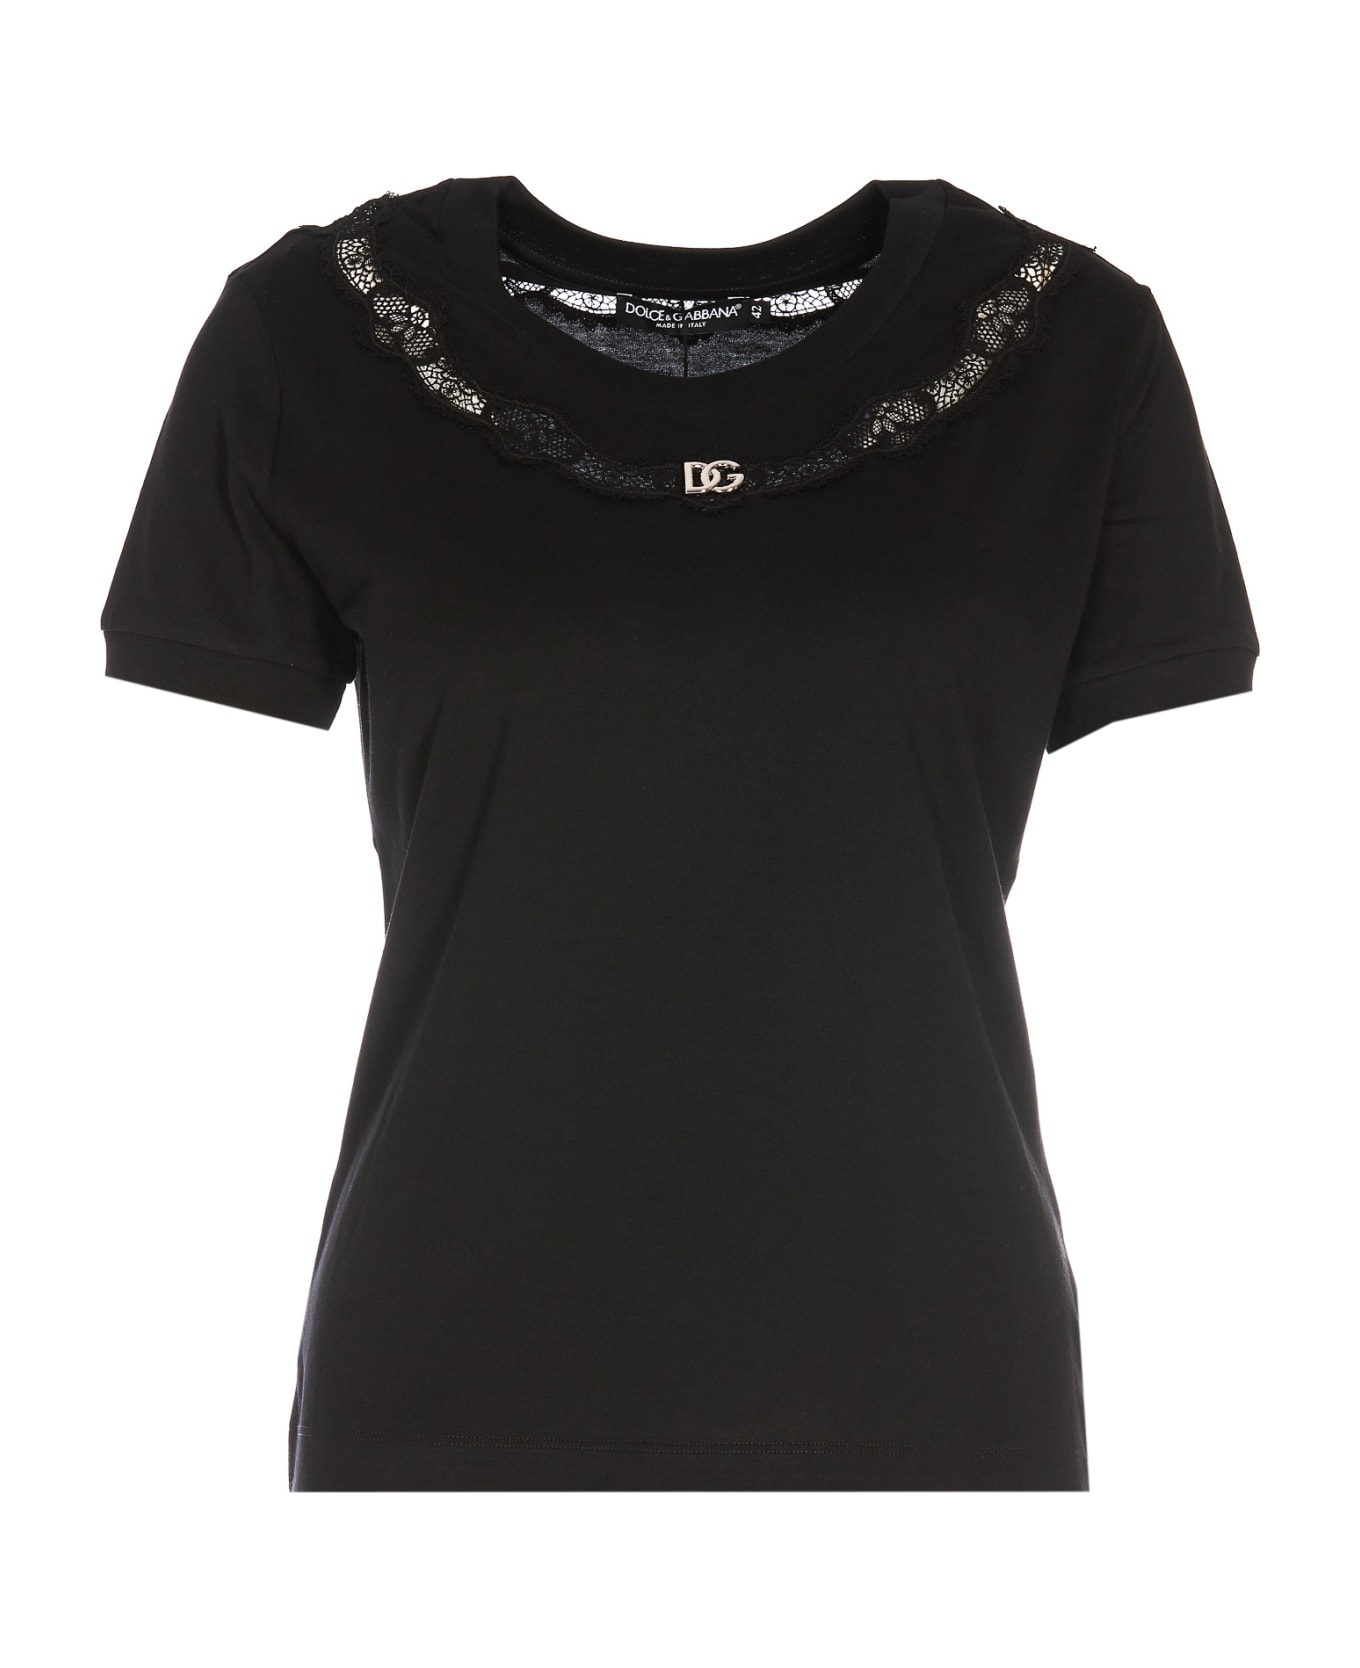 Dolce & Gabbana Logo T-shirt - Black Tシャツ